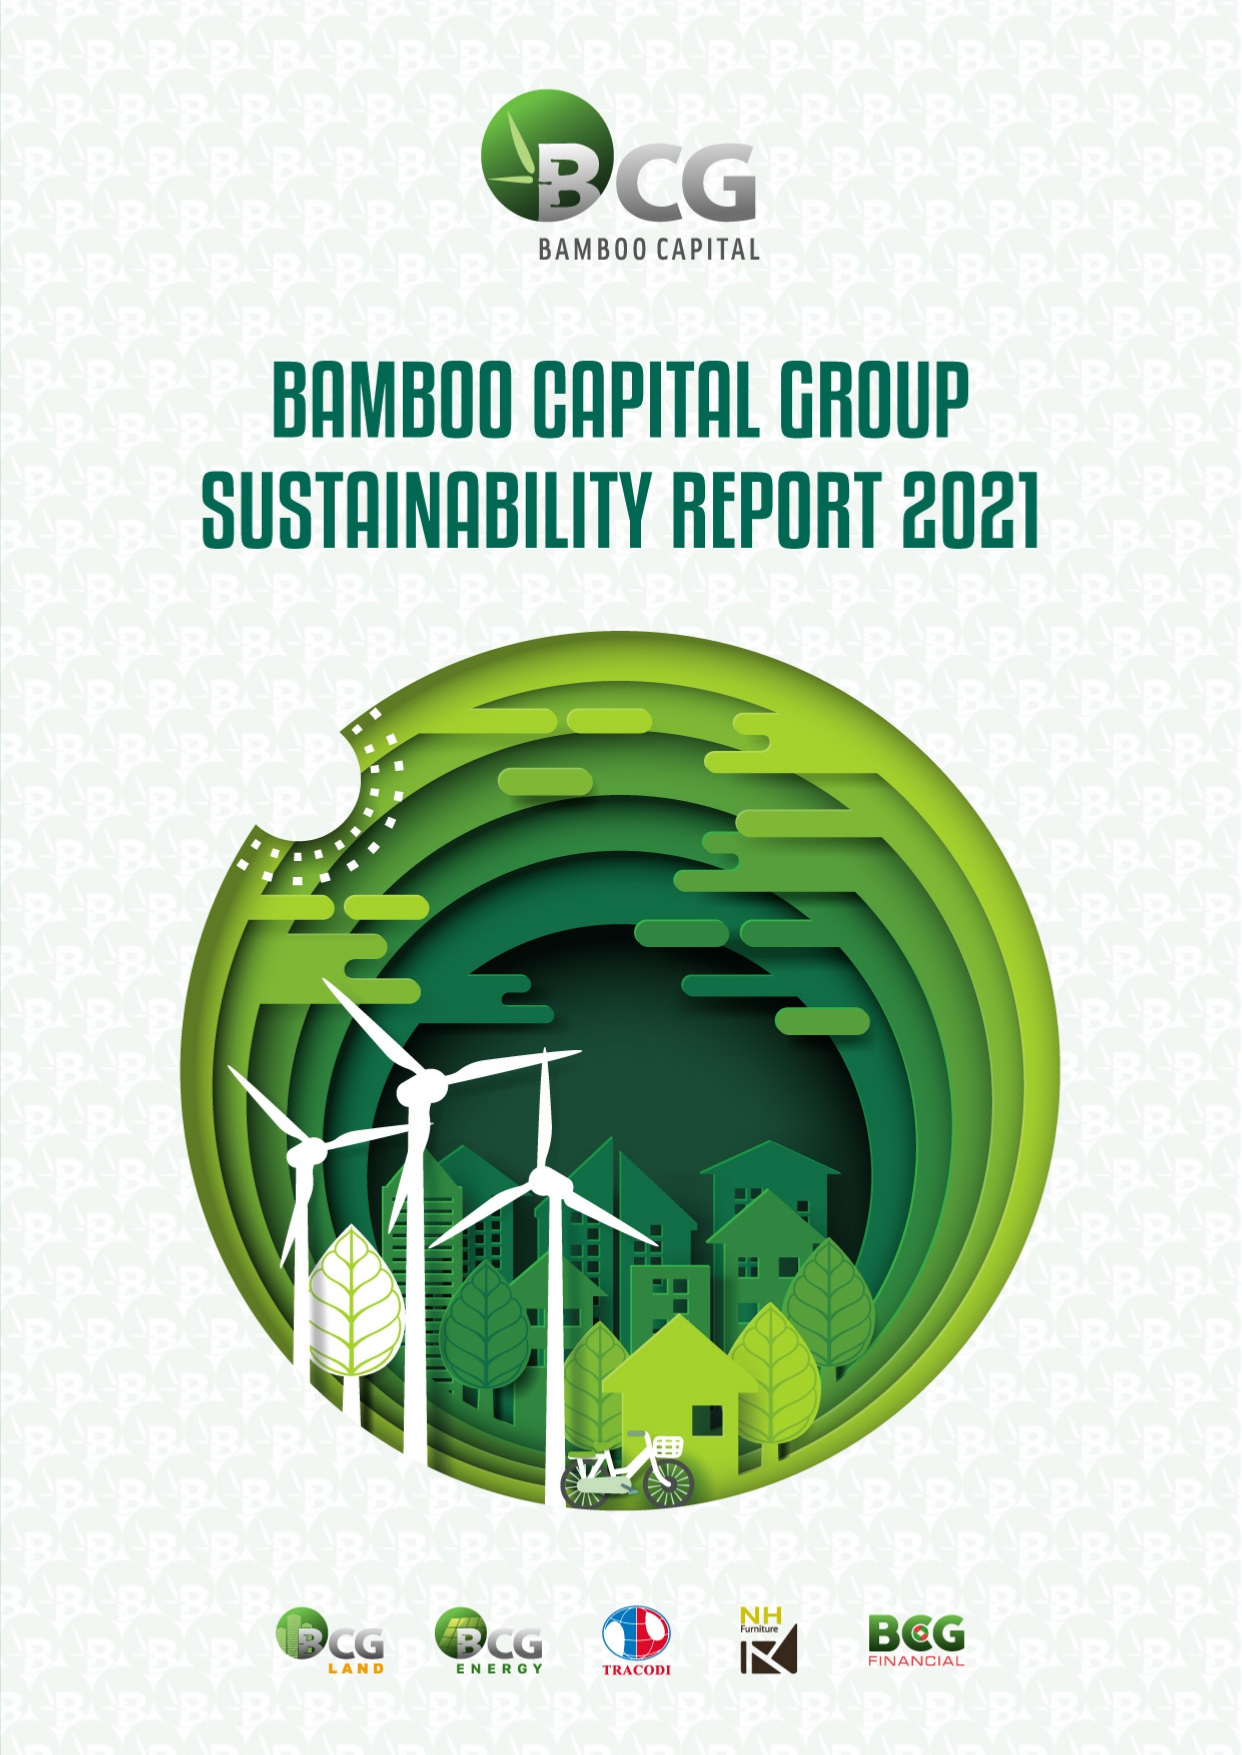 The sustainable development report 2021